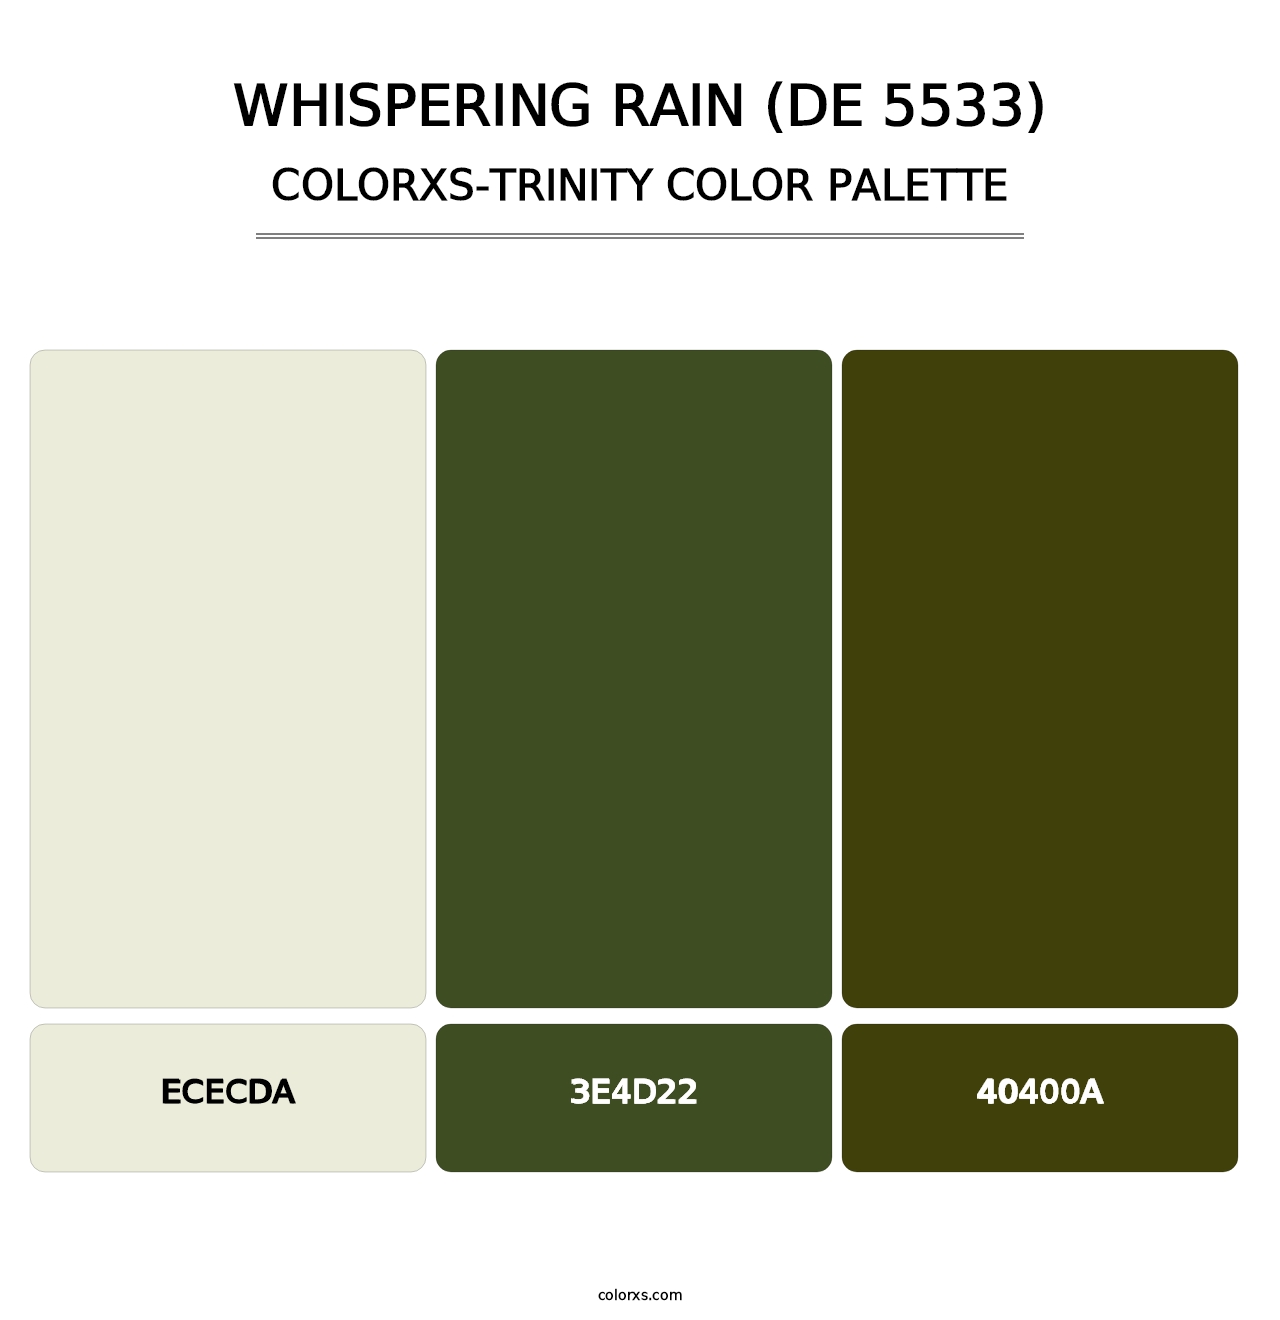 Whispering Rain (DE 5533) - Colorxs Trinity Palette